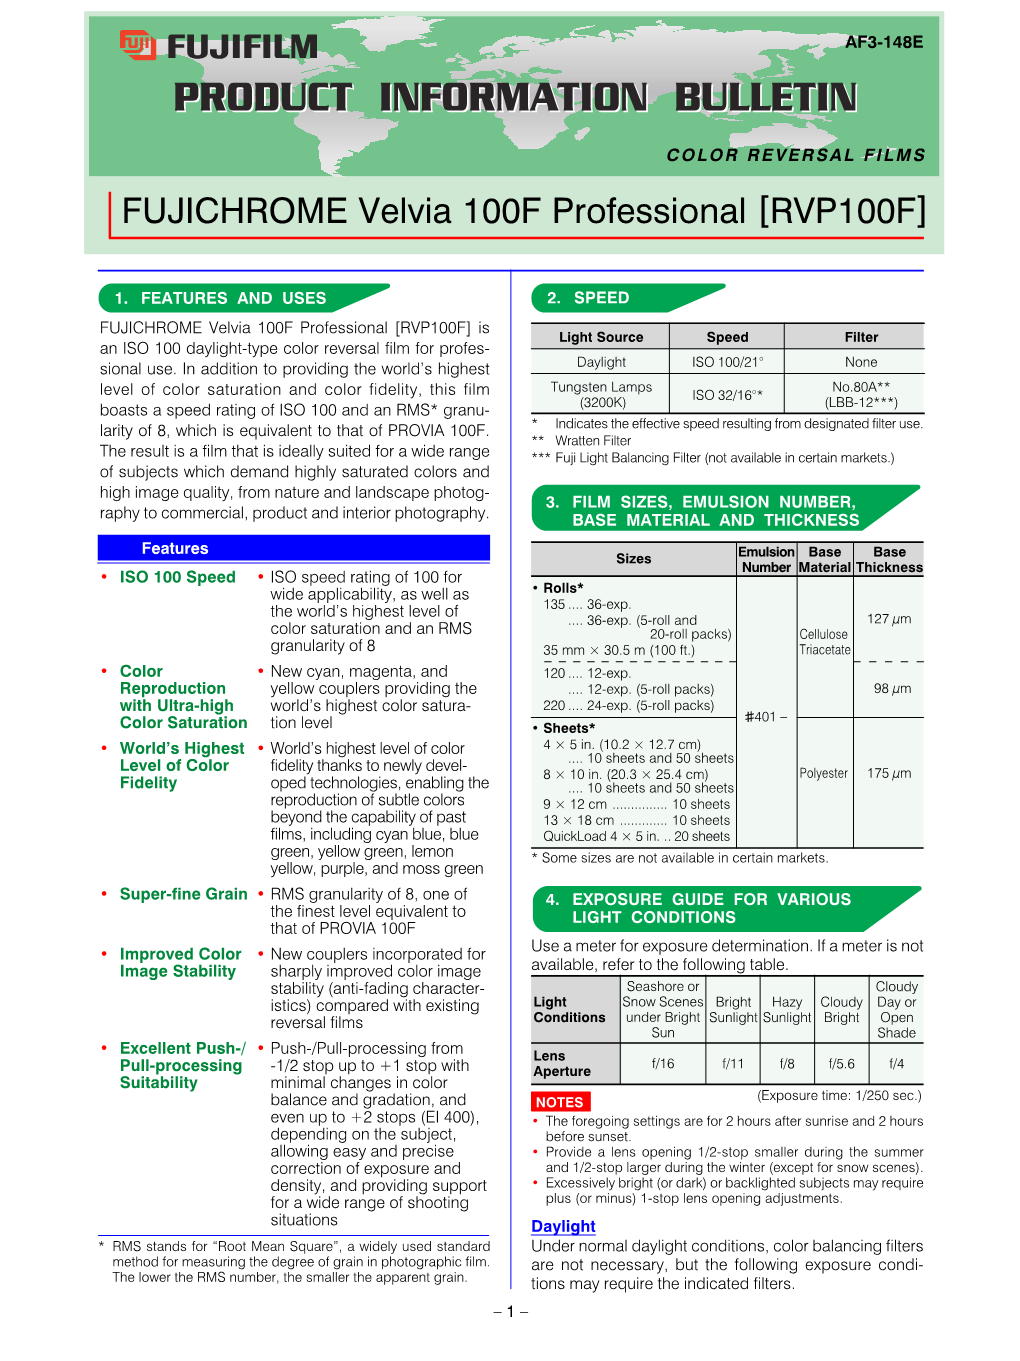 FUJICHROME Velvia 100F Professional [RVP100F]